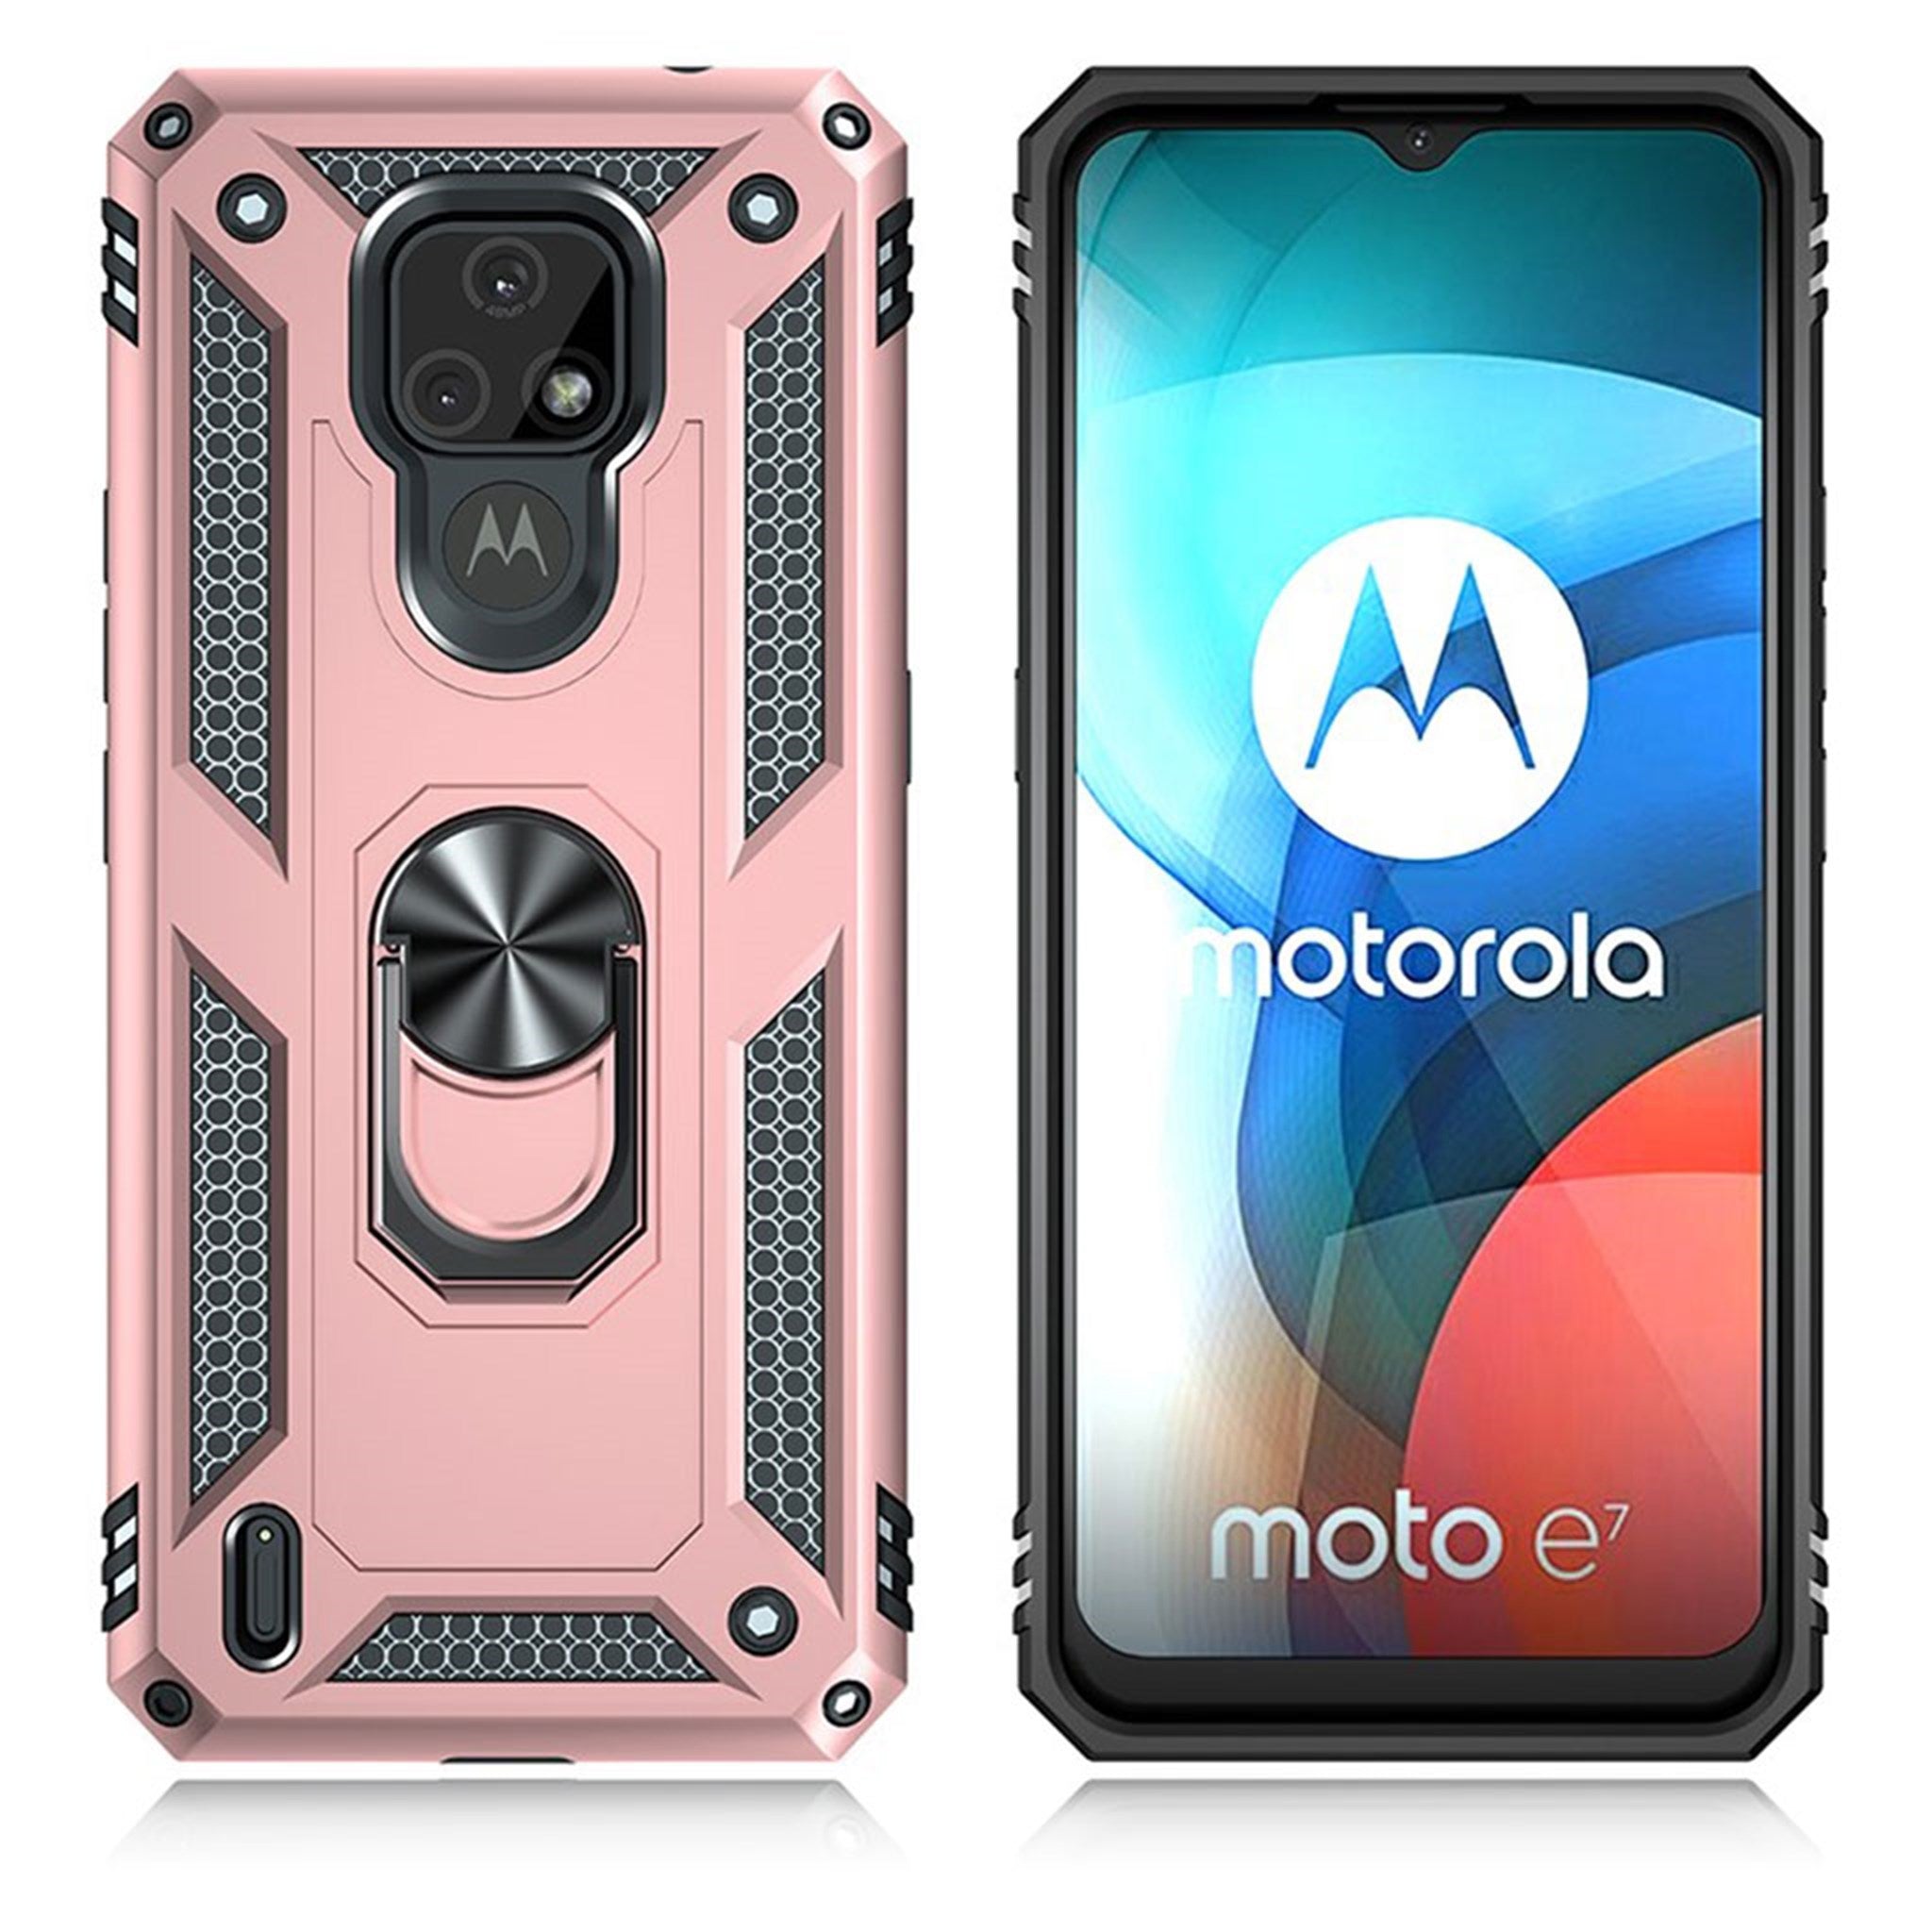 Bofink Combat Motorola Moto E7 case - Rose Gold